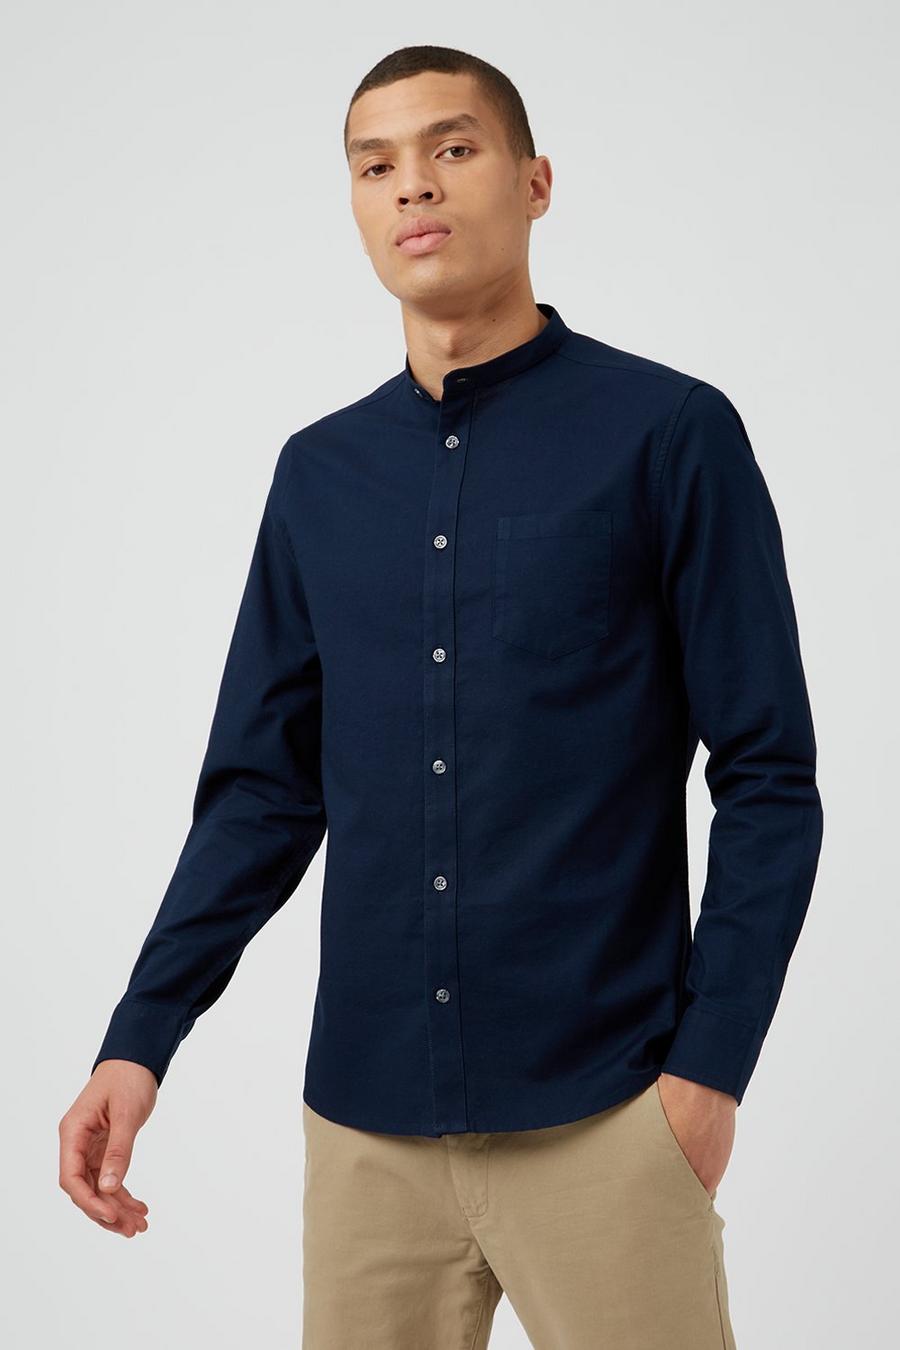 Navy Long Sleeve Skinny Oxford Shirt